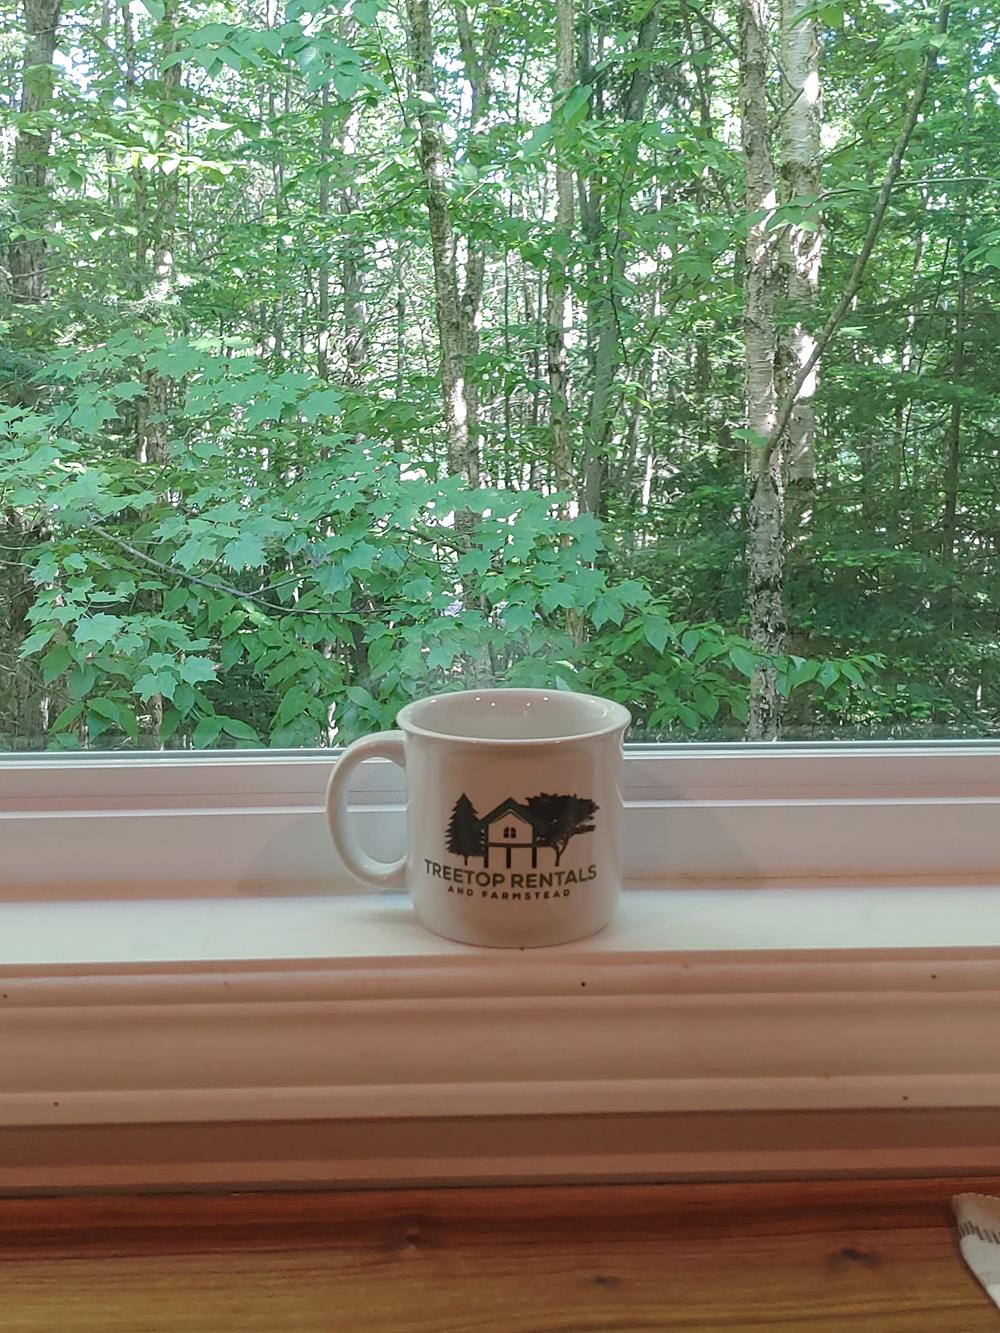 a mug on a window sill